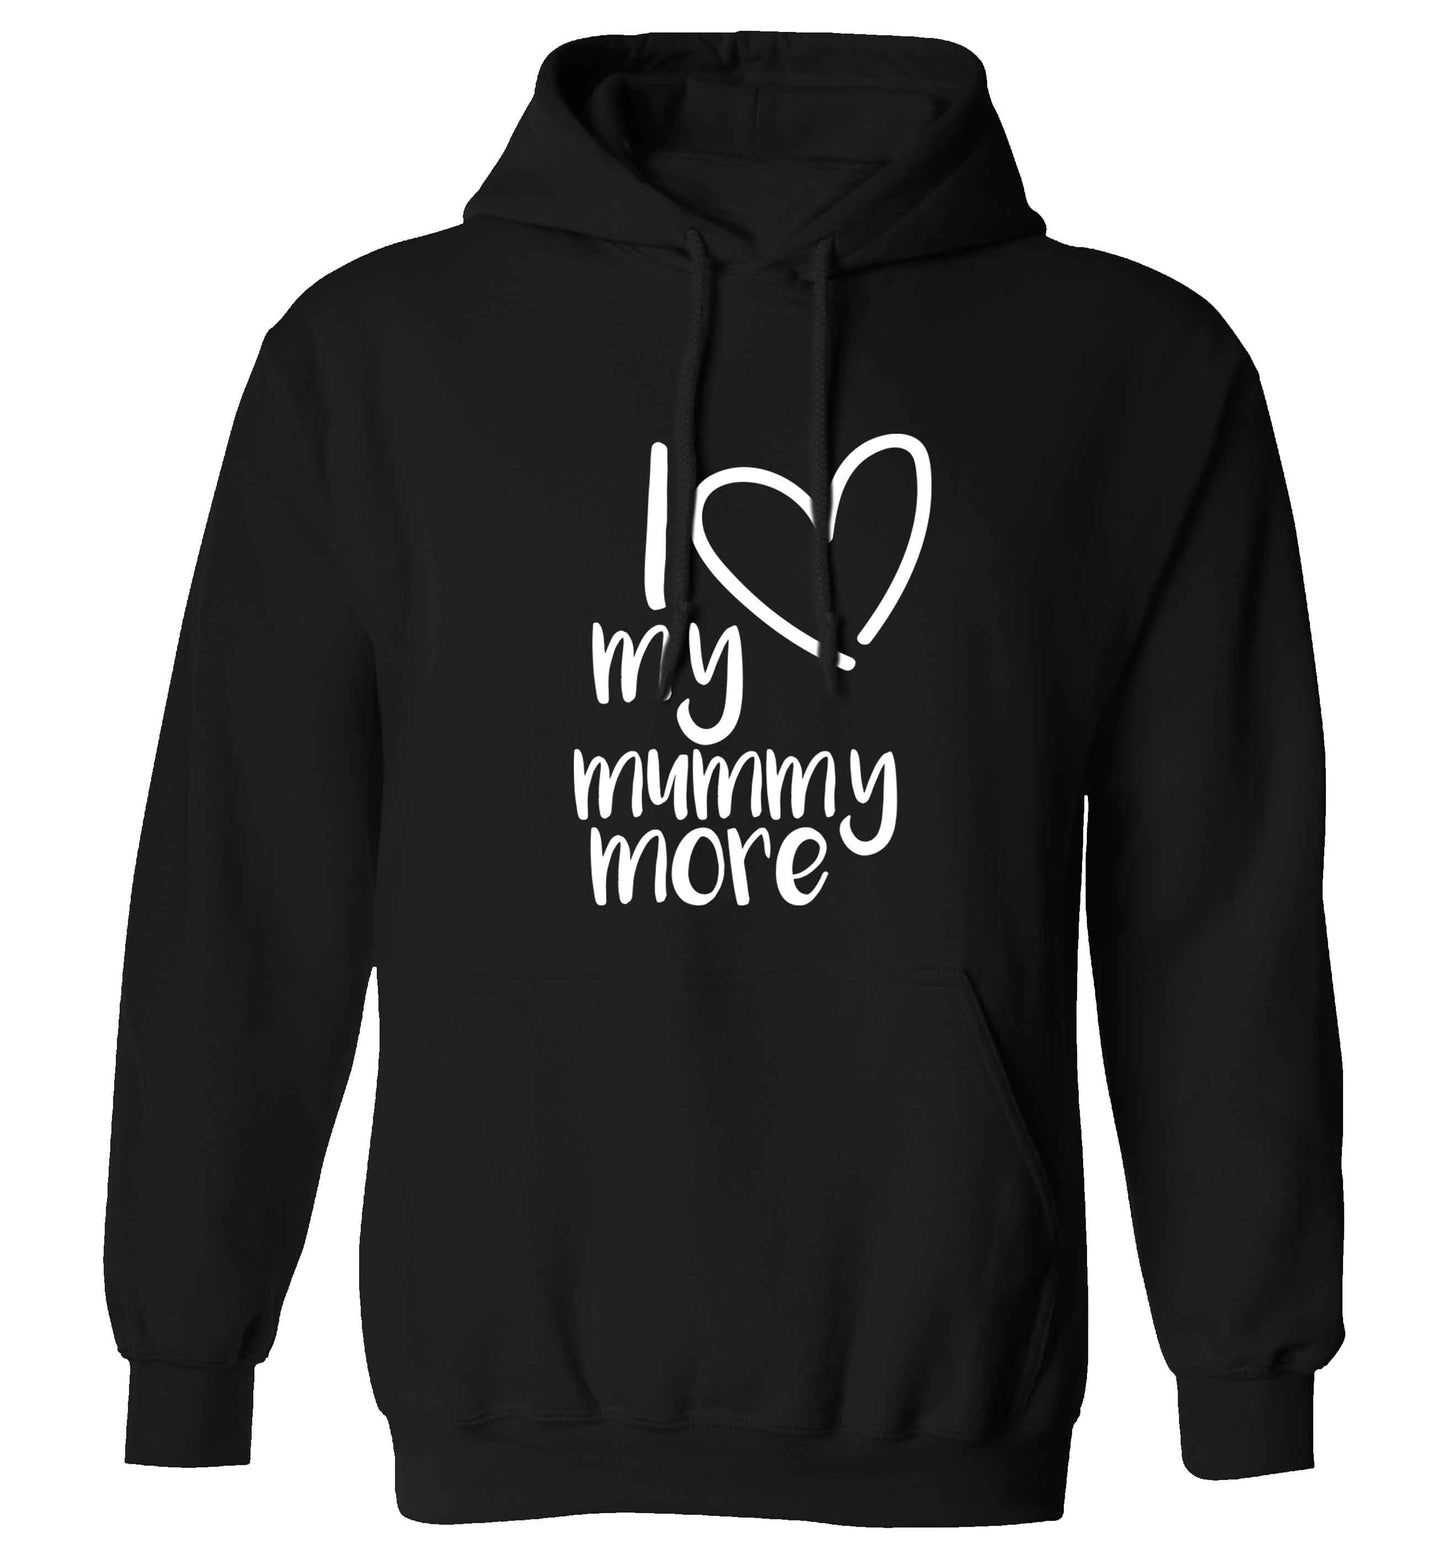 I love my mummy more adults unisex black hoodie 2XL